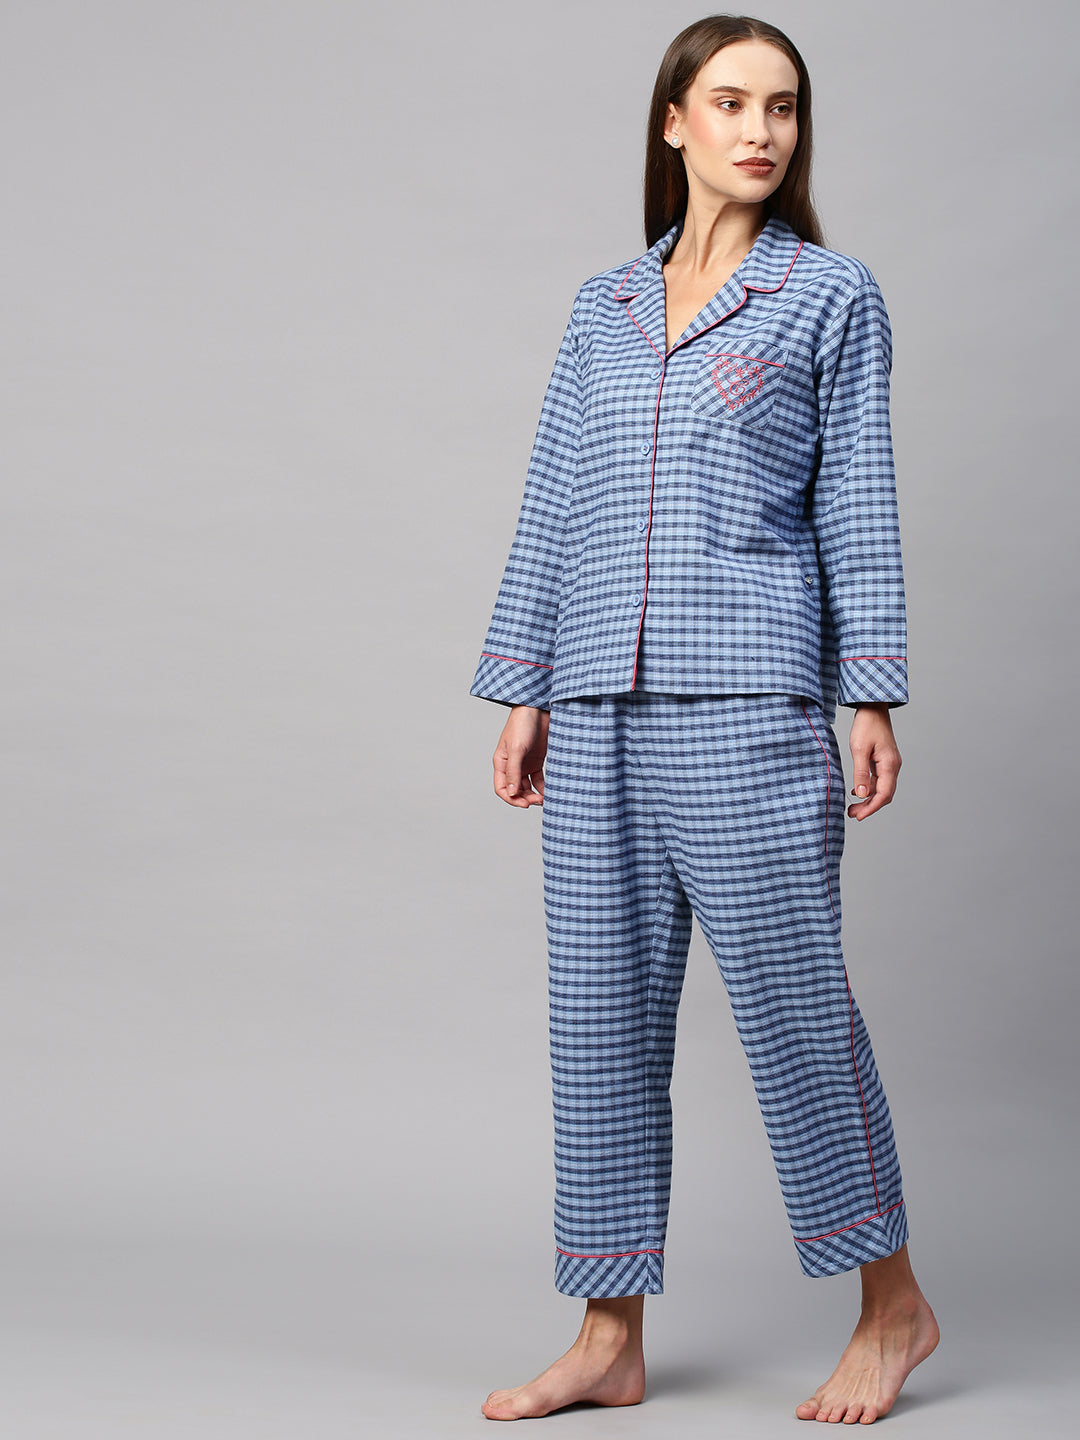 Drop Shoulder Checkered Nihgtsuit W/ Contrast Detailing